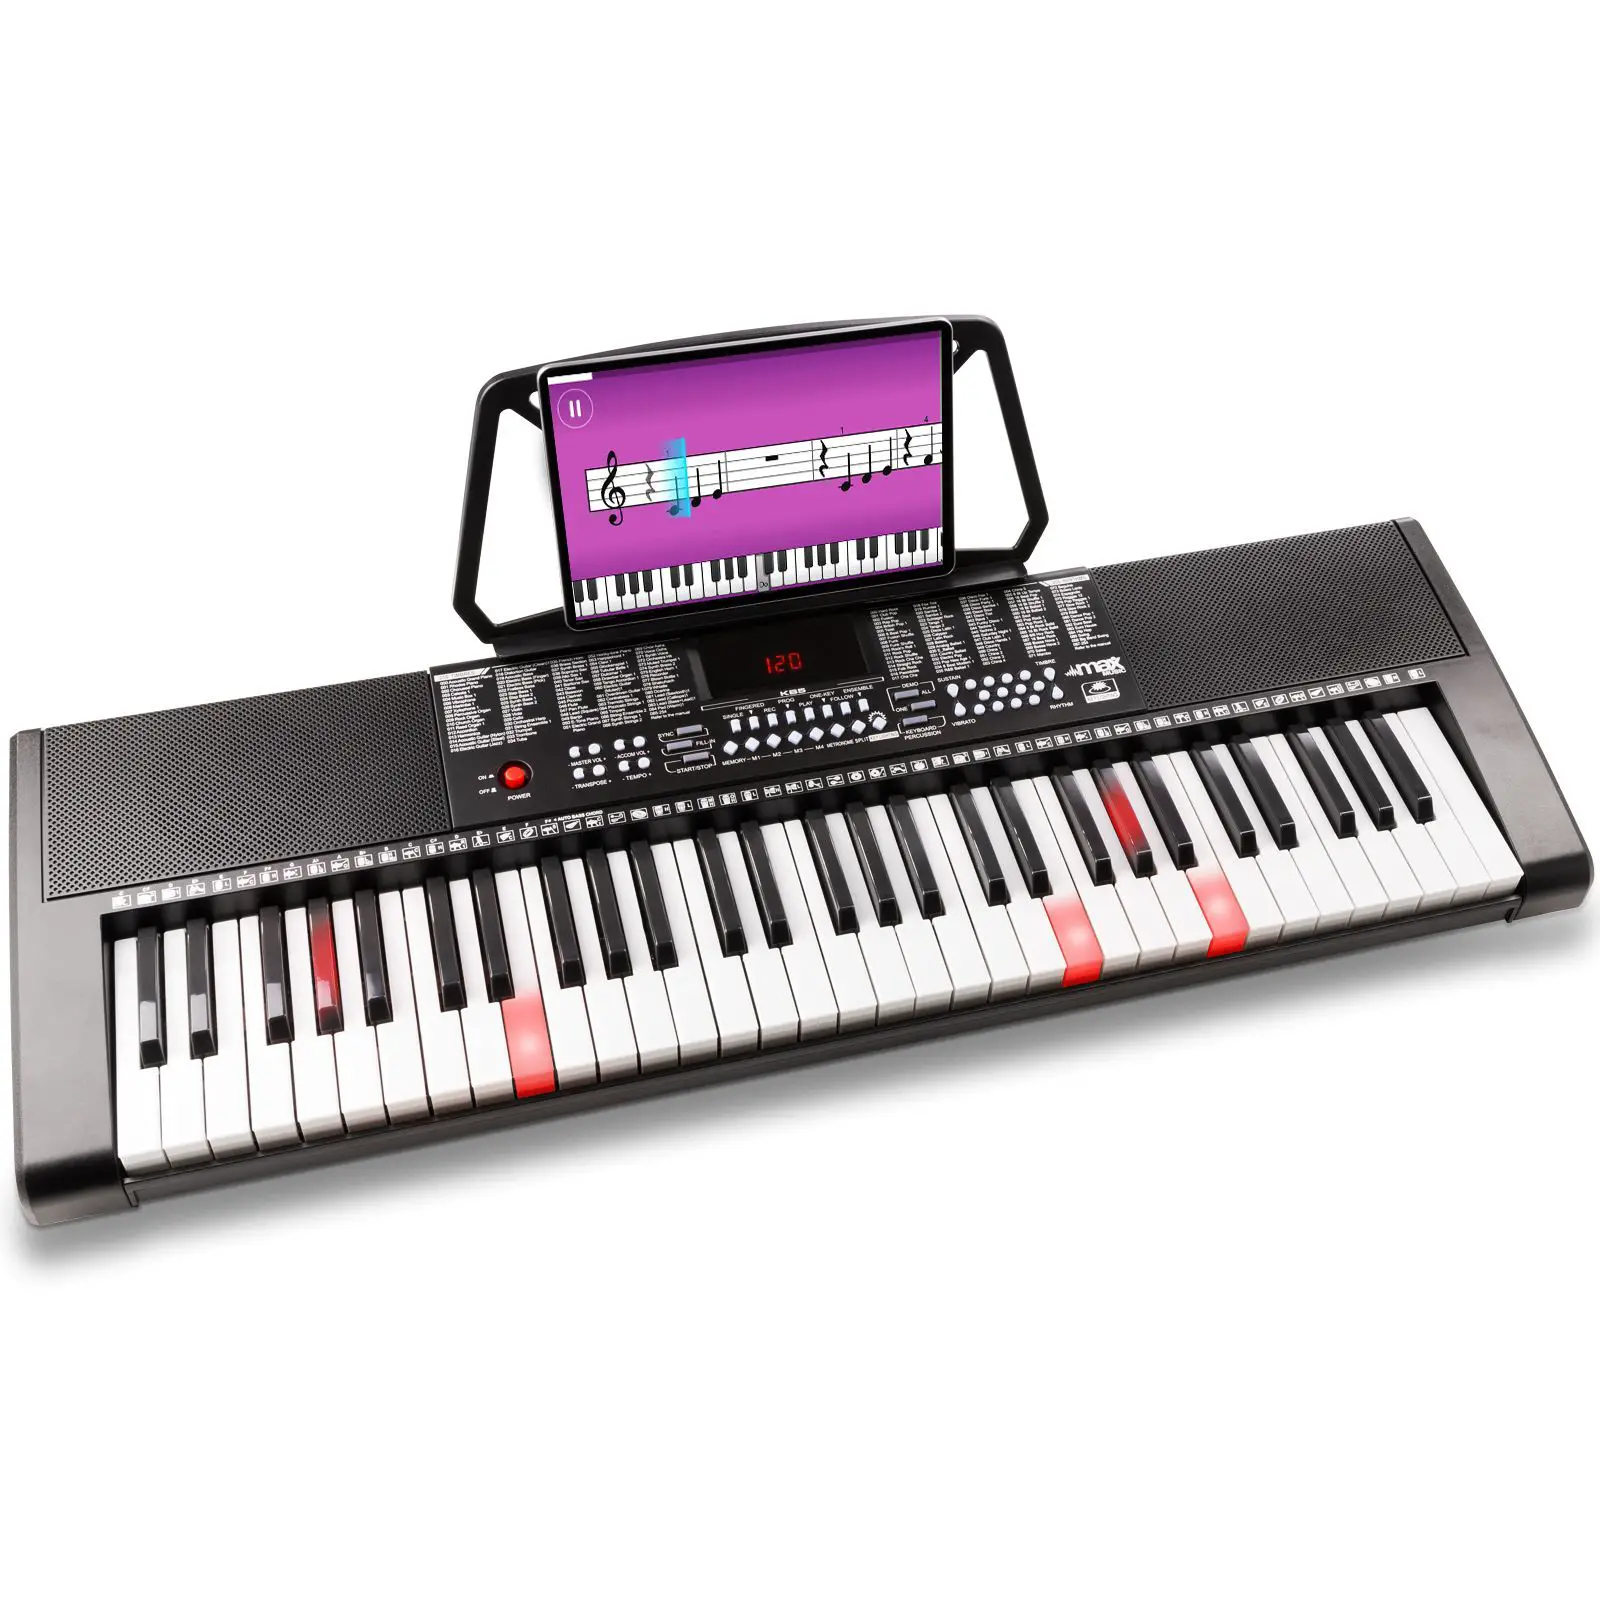 Retourdeal - MAX KB5 keyboard voor beginners met 61 lichtgevende